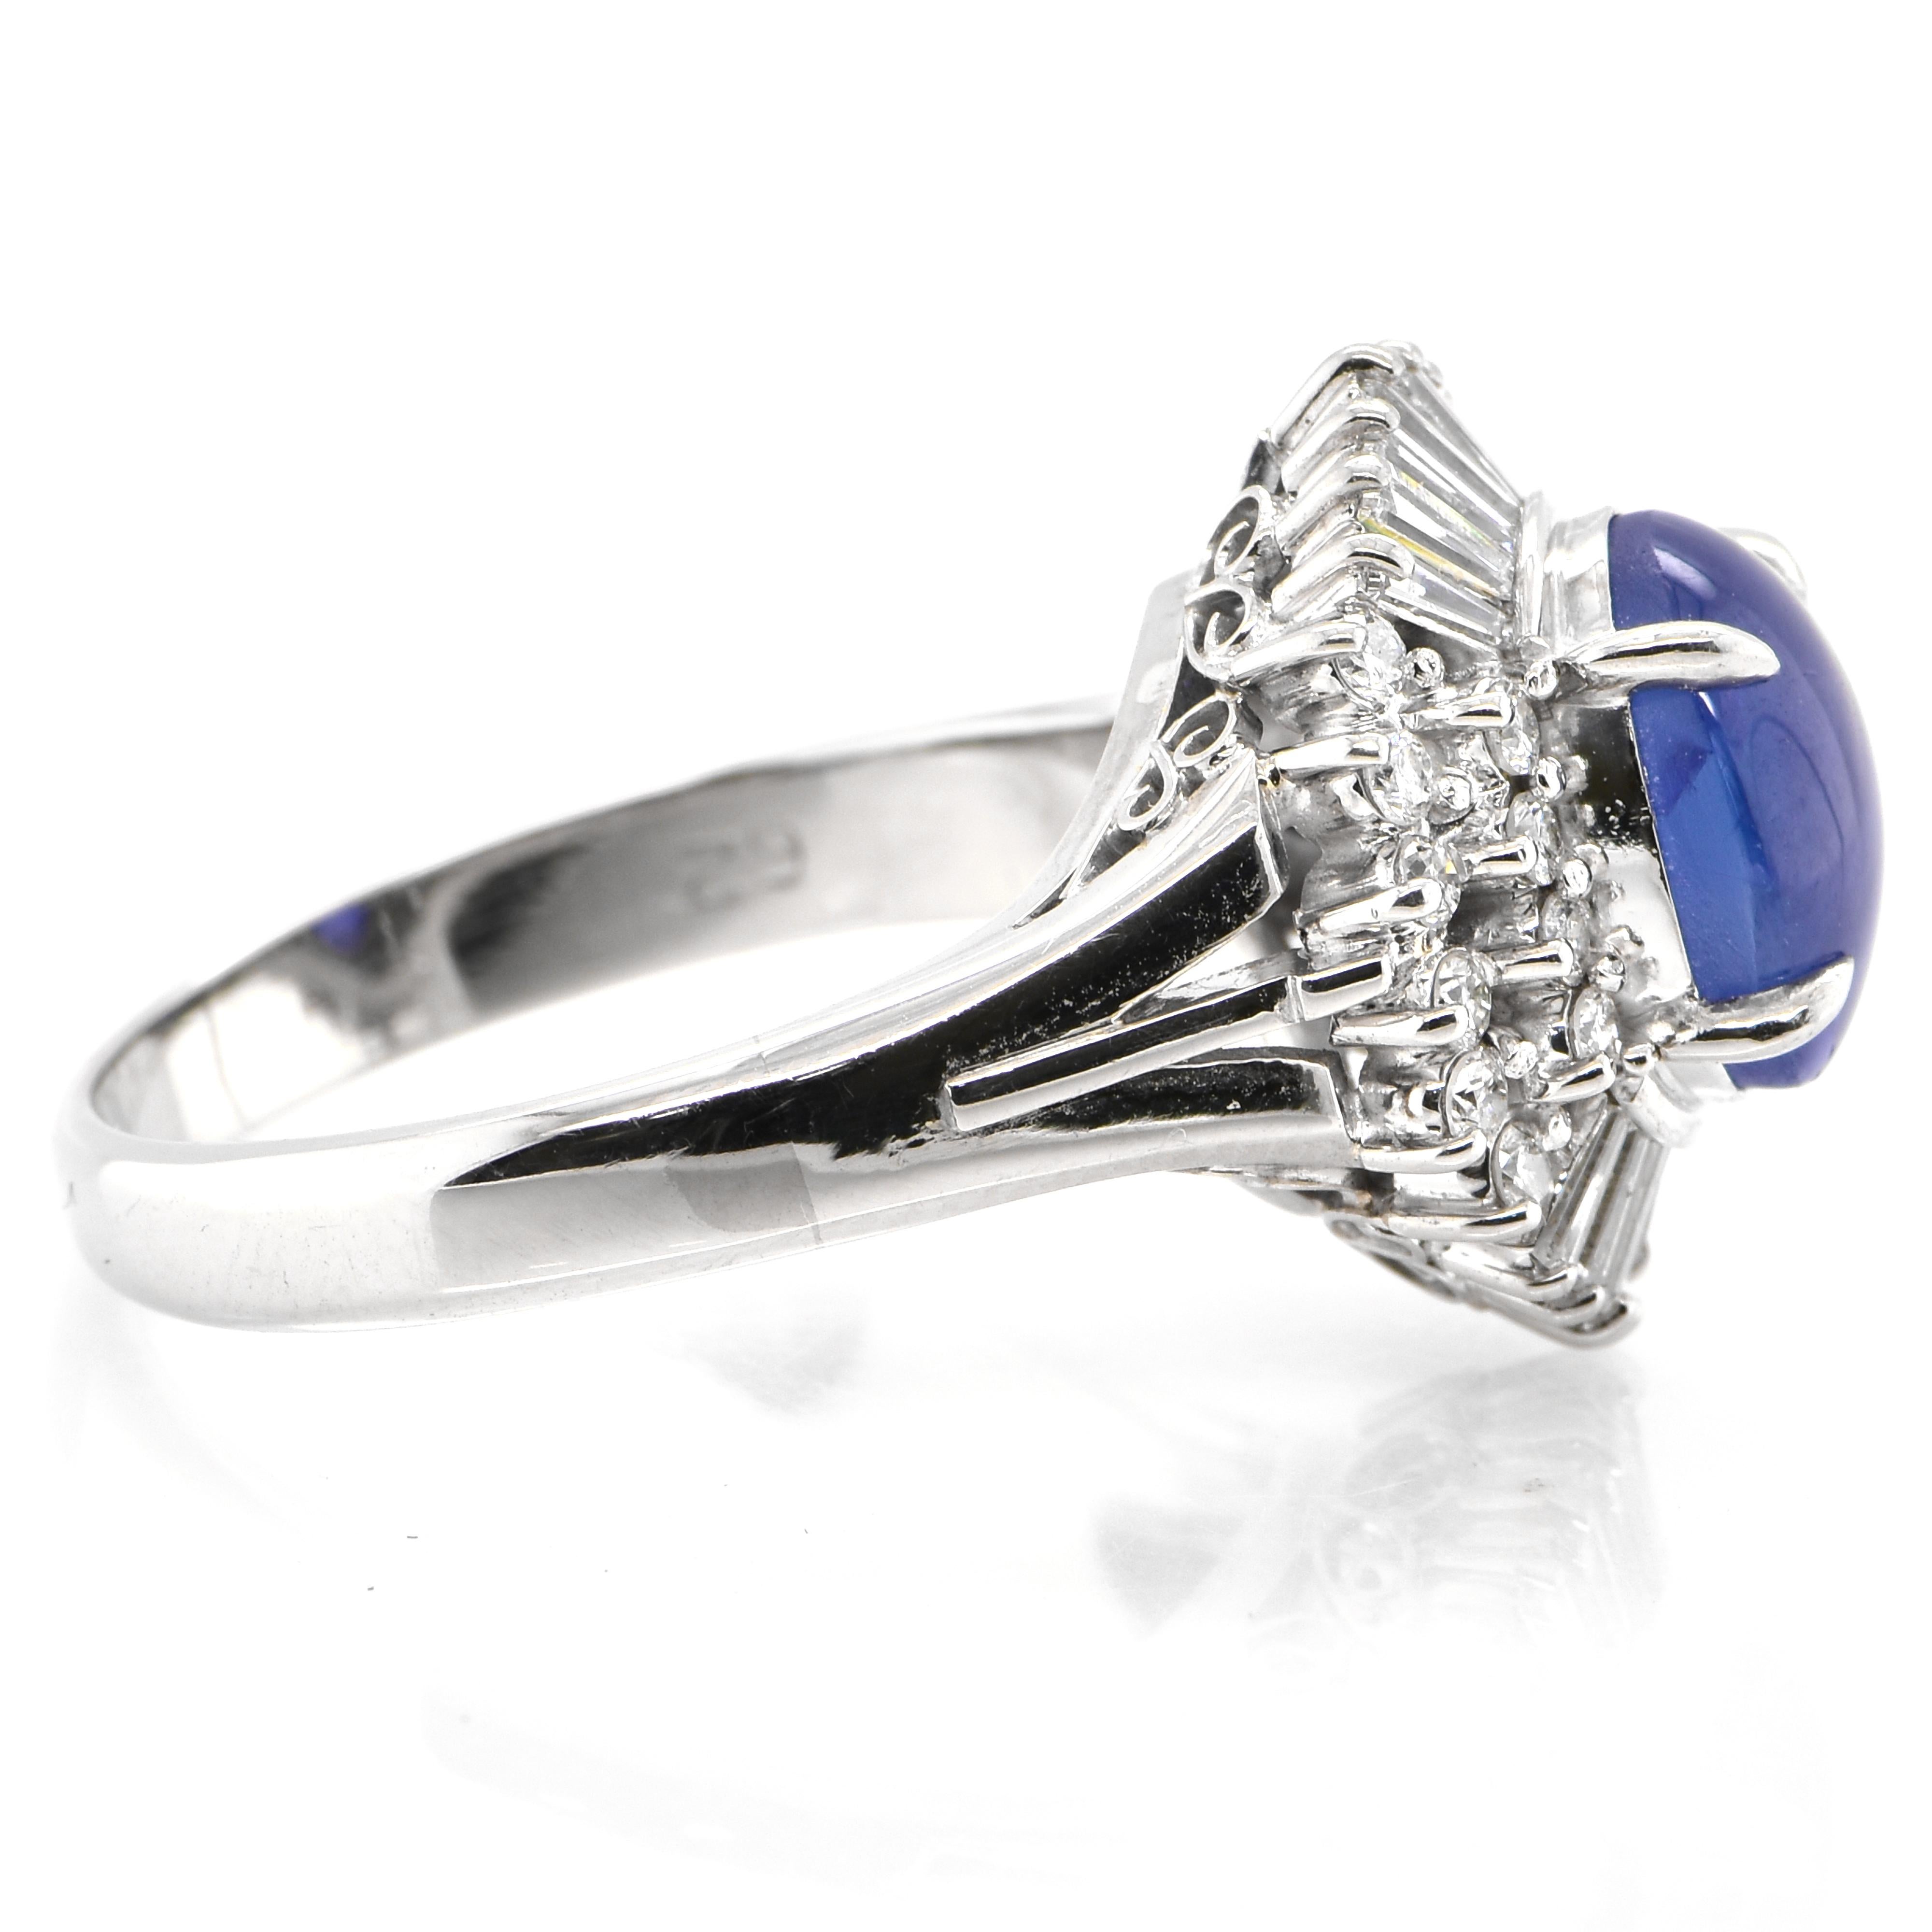 Women's 3.30 Carat Natural Star Sapphire and Diamond Ballerina Ring Made in Platinum